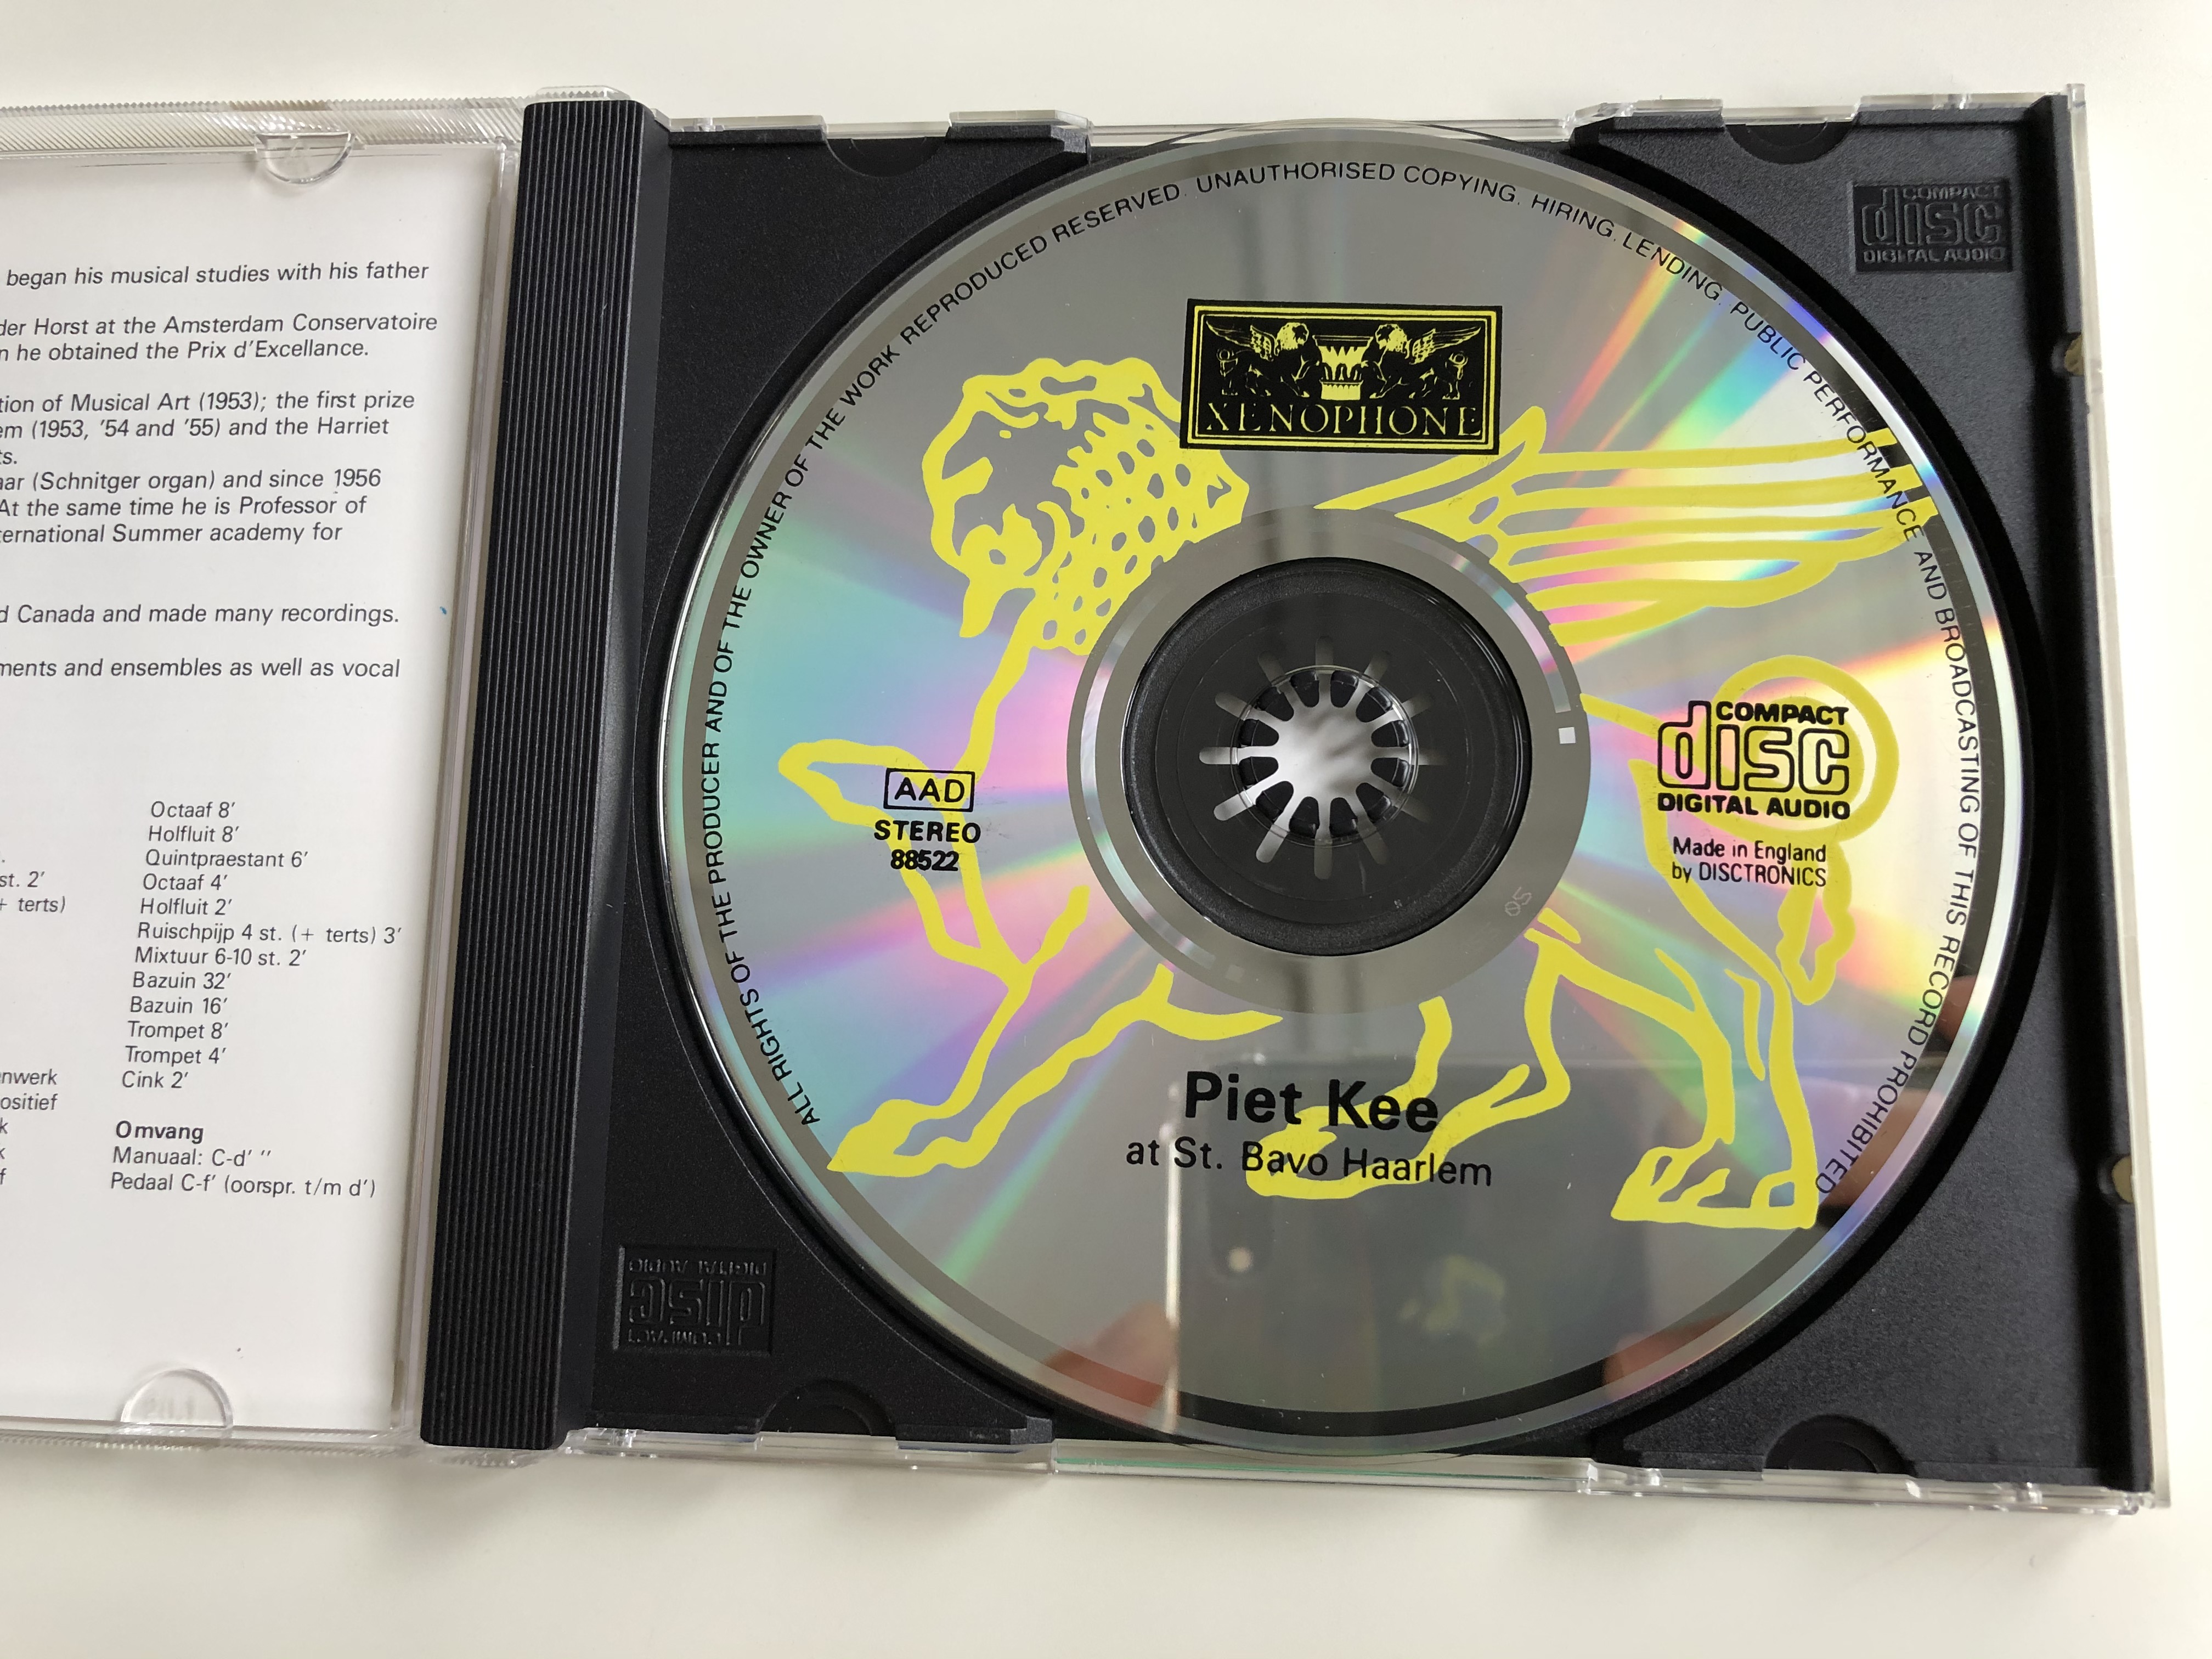 piet-kee-at-st.-bavo-haarlem-xenophone-audio-cd-1988-stereo-88522-4-.jpg